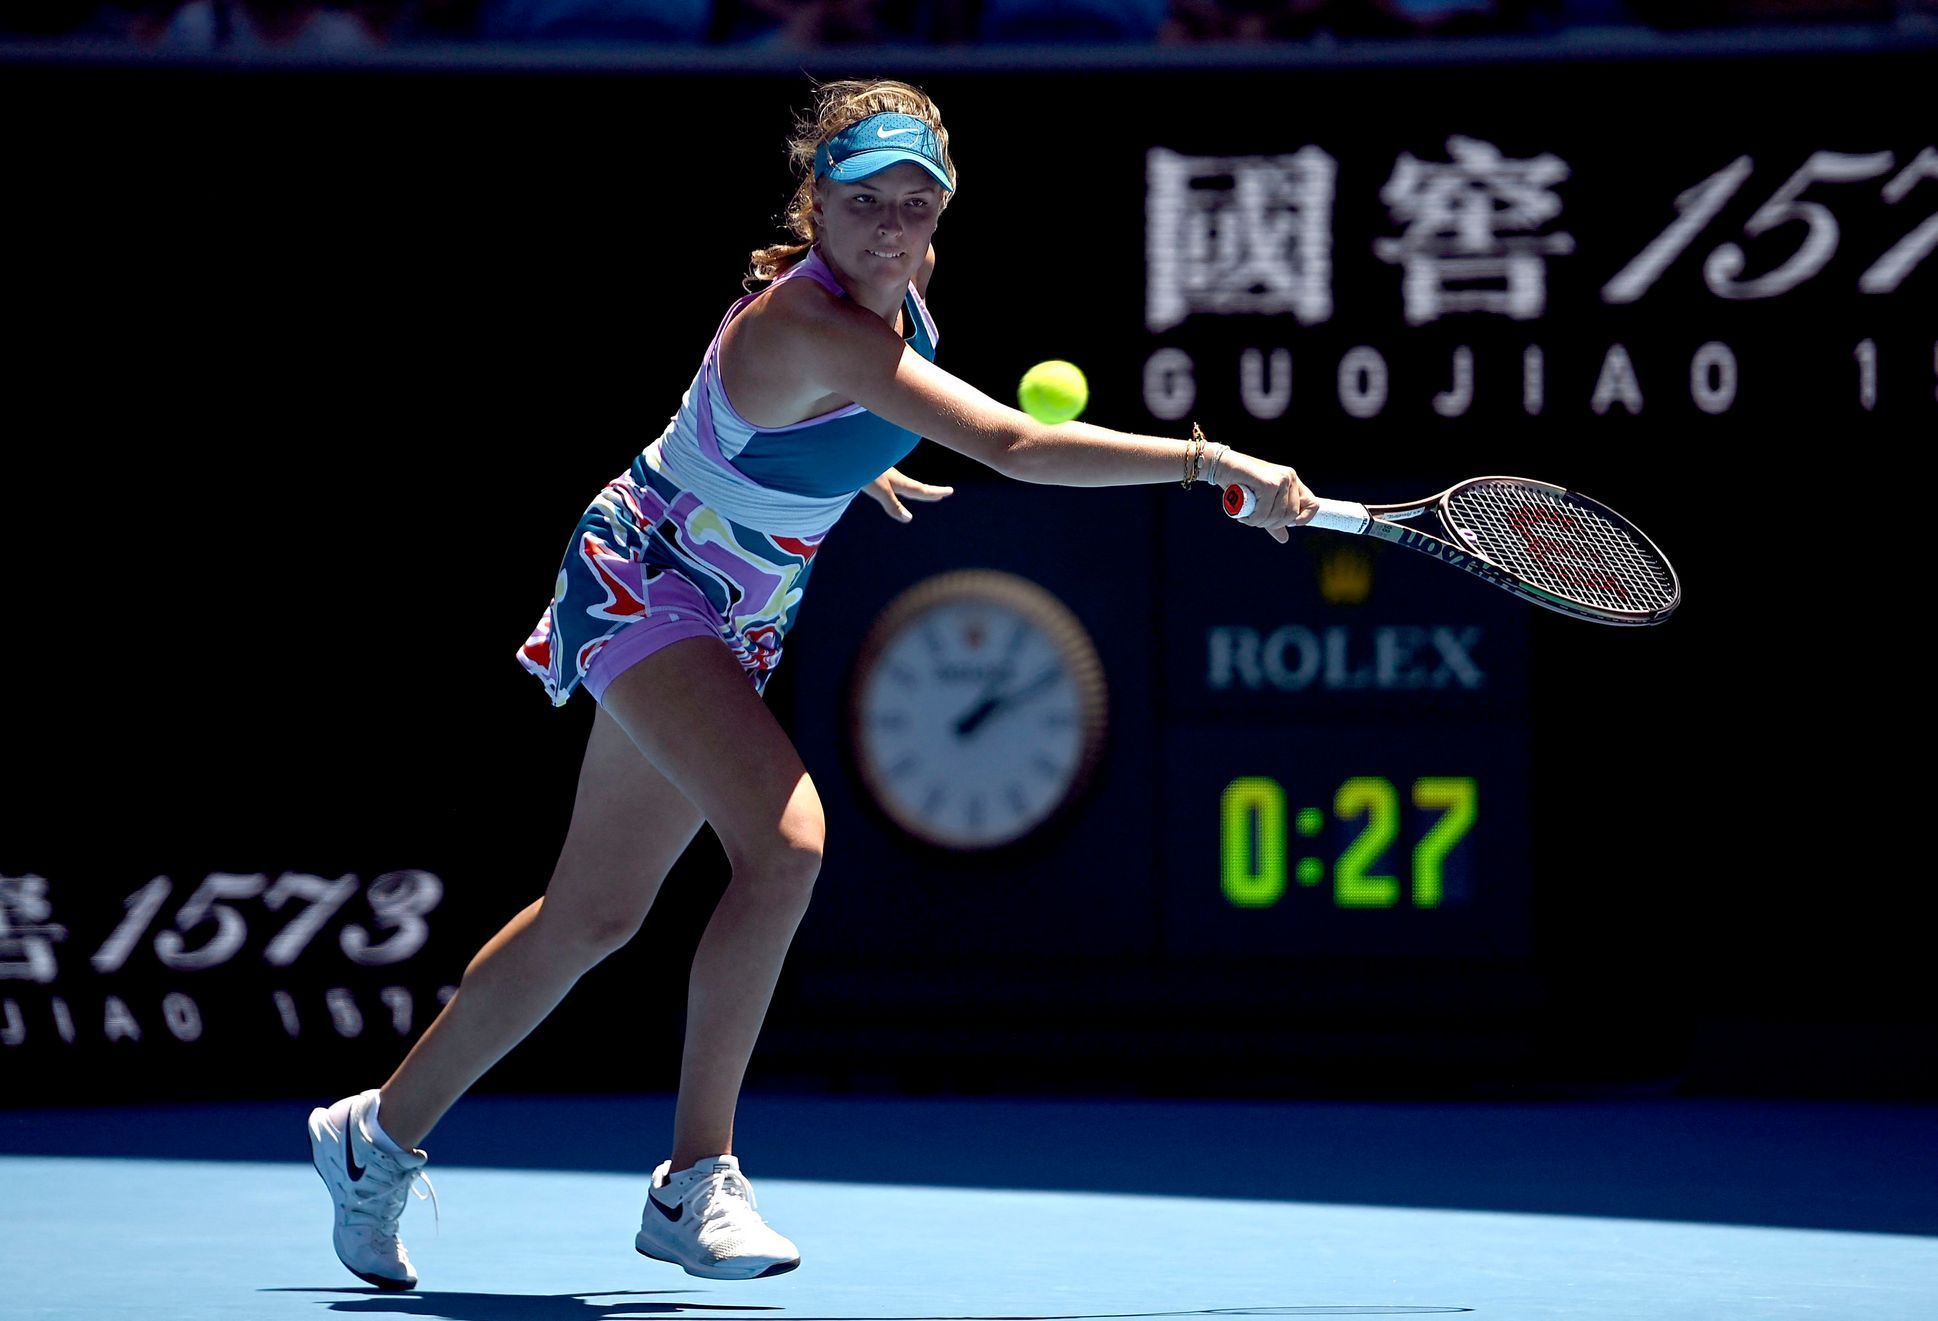 Linda Fruhvirtová, Australian Open 2023, osmifinále